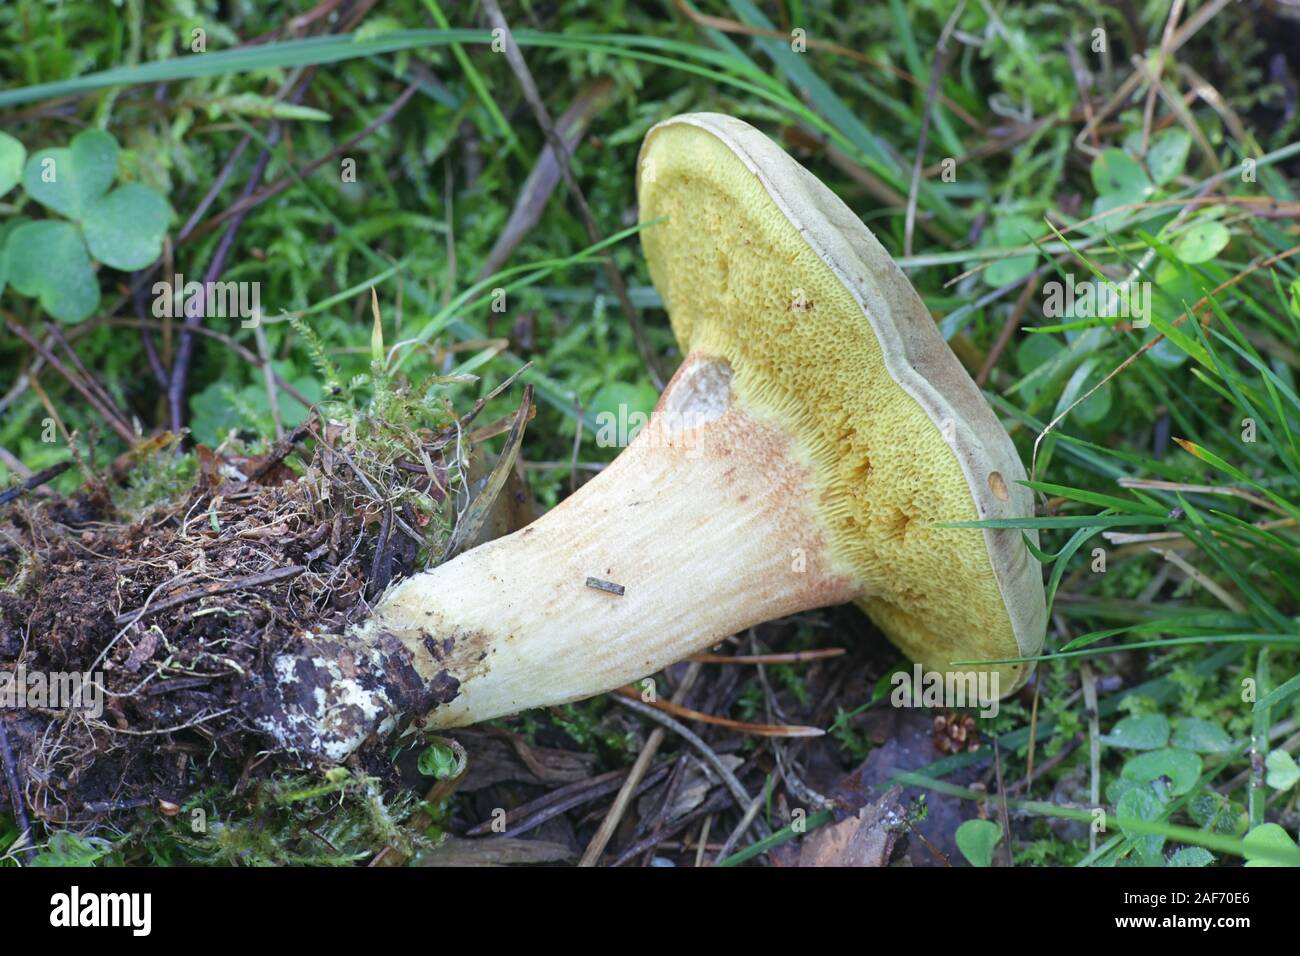 Xerocomus subtomentosus, known as suede bolete, brown and yellow bolet, boring brown bolete or yellow-cracked bolete, wild edible mushroom from Finlan Stock Photo